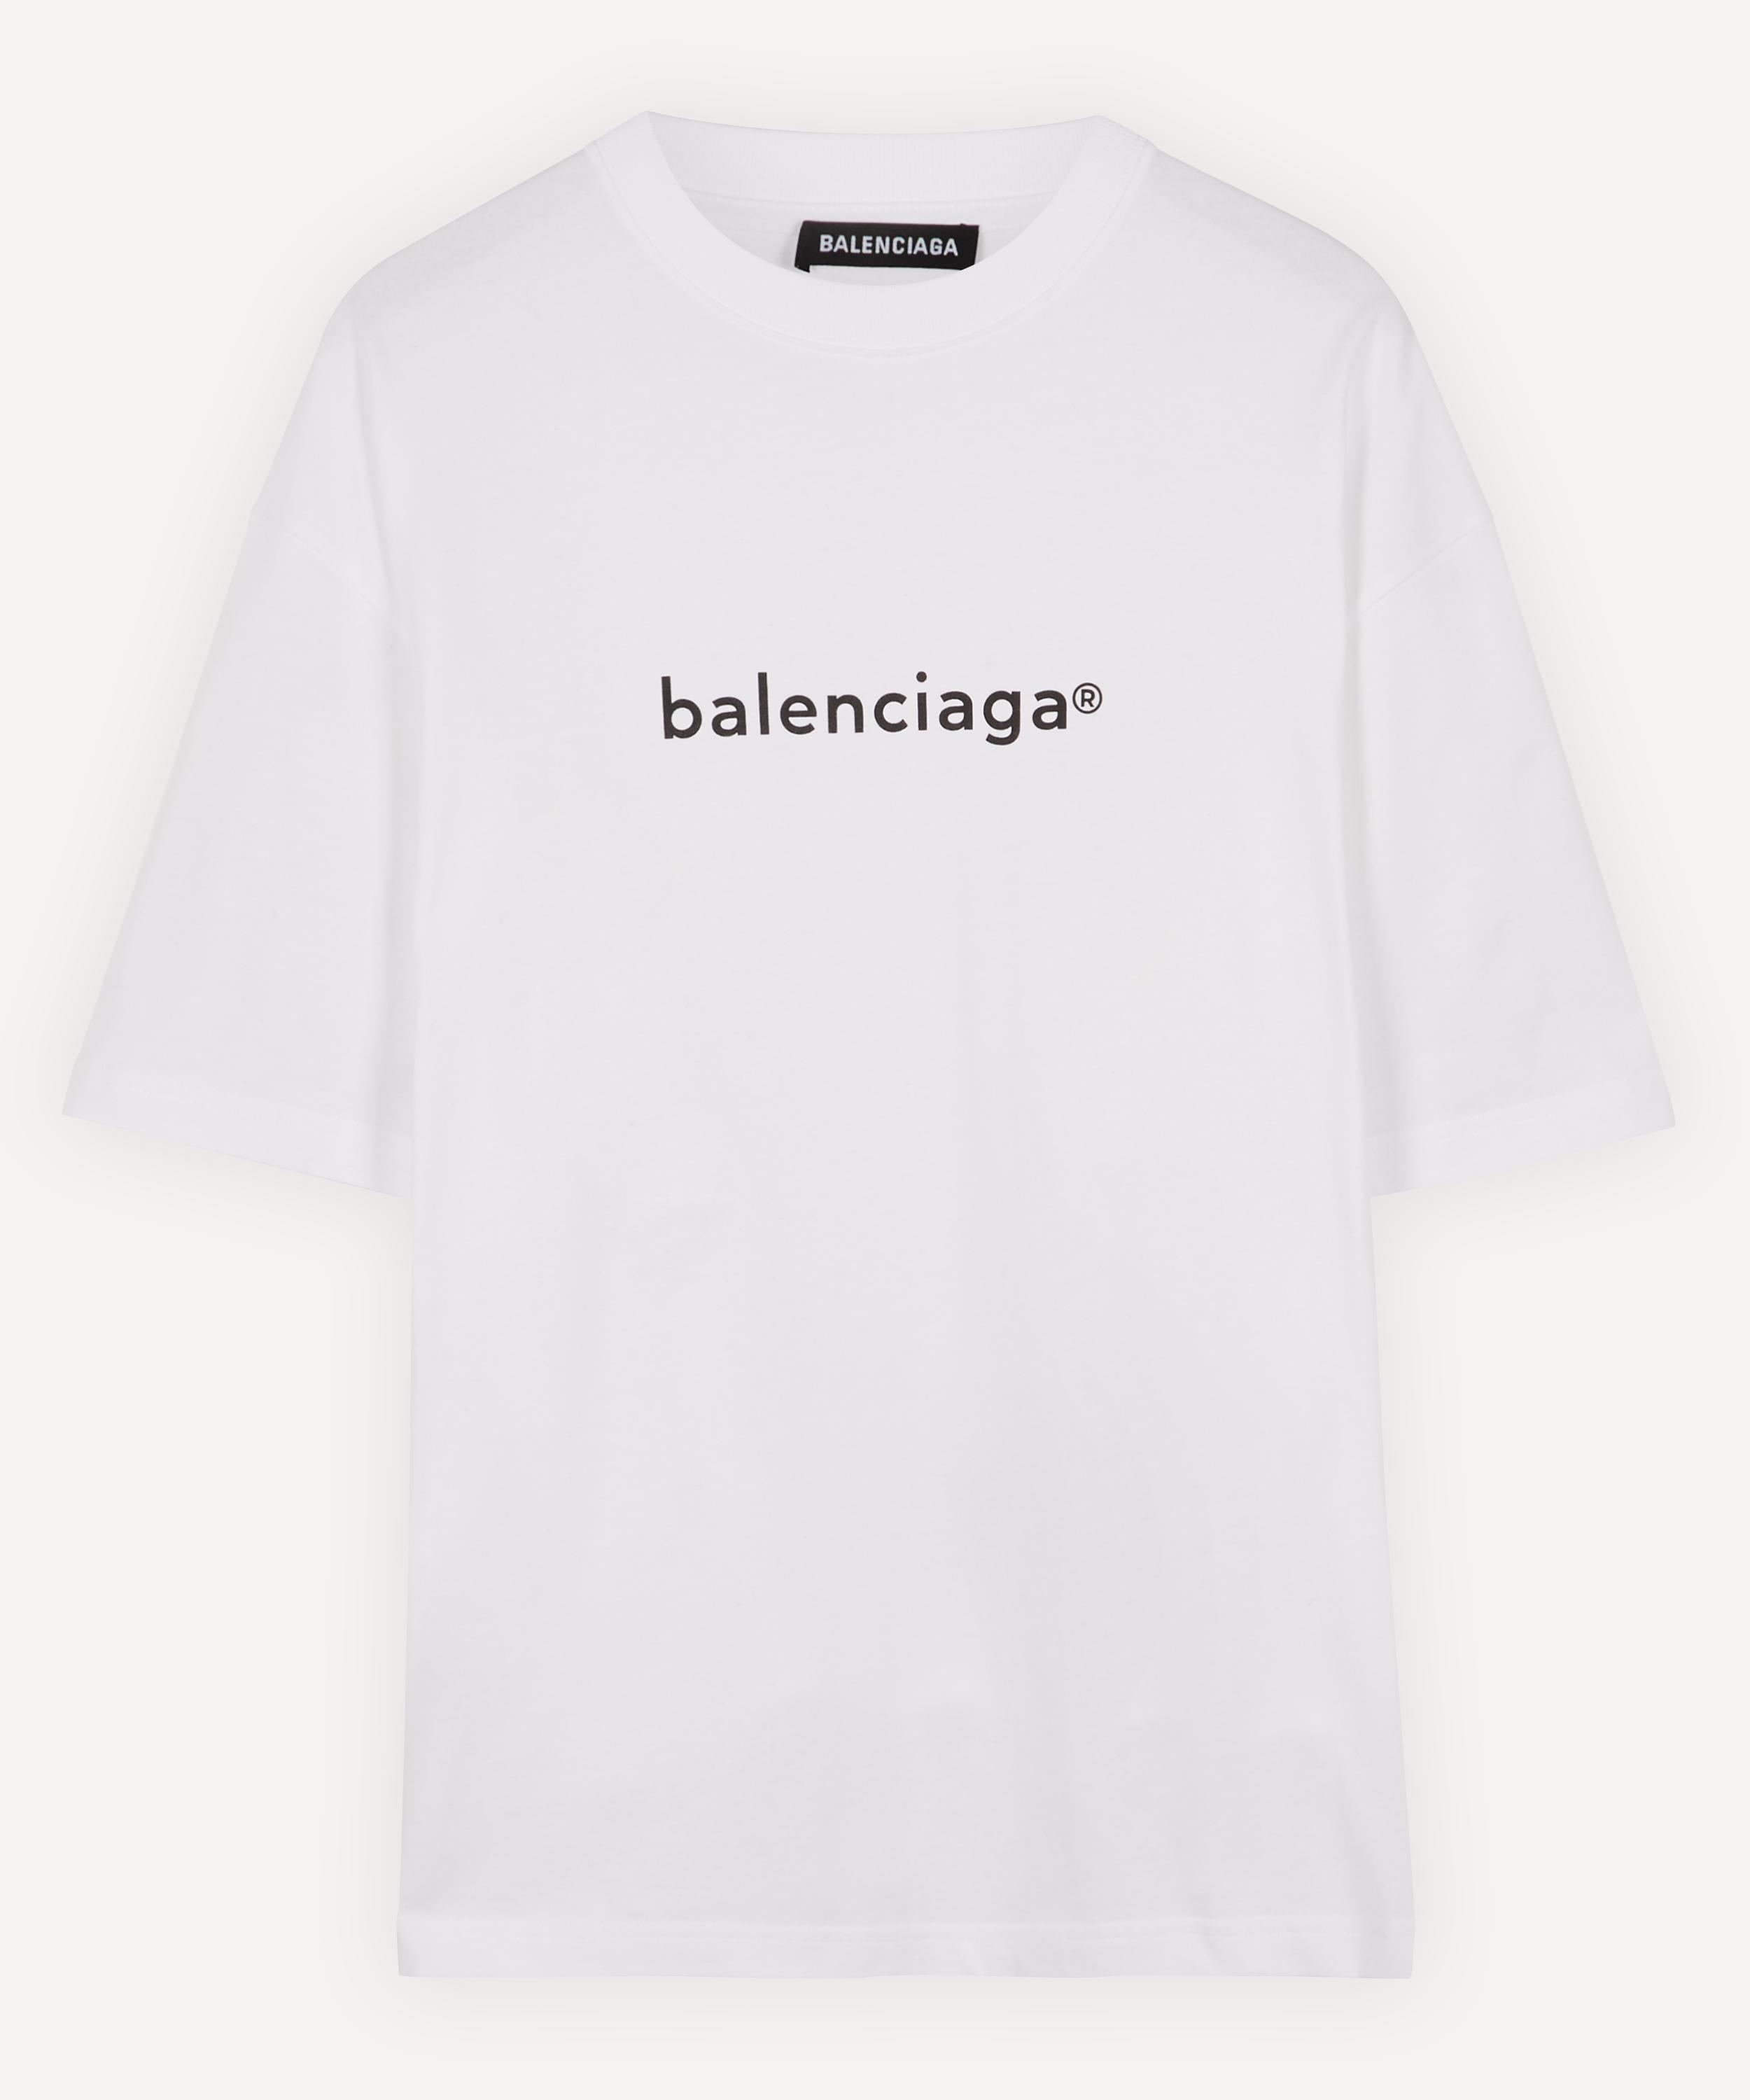 Balenciaga New Copyright Cotton Logo T-shirt in White for Men - Lyst